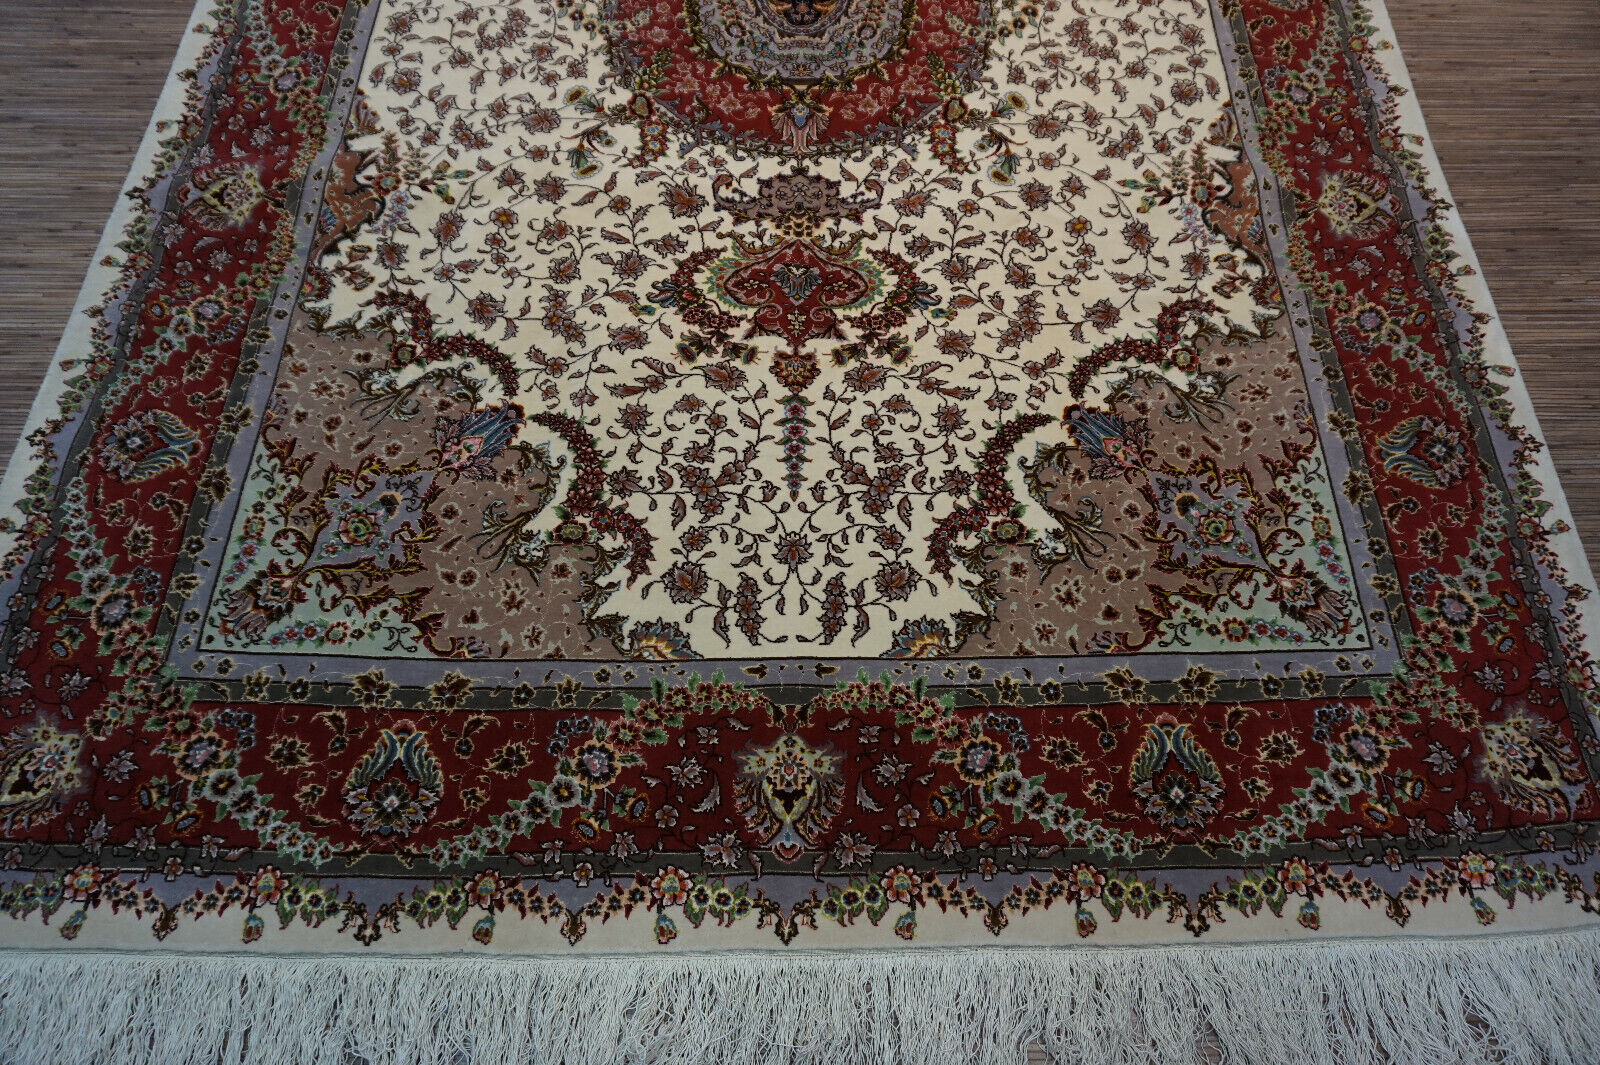 Overhead shot of the Persian Tabriz rug demonstrating its opulent silk blend